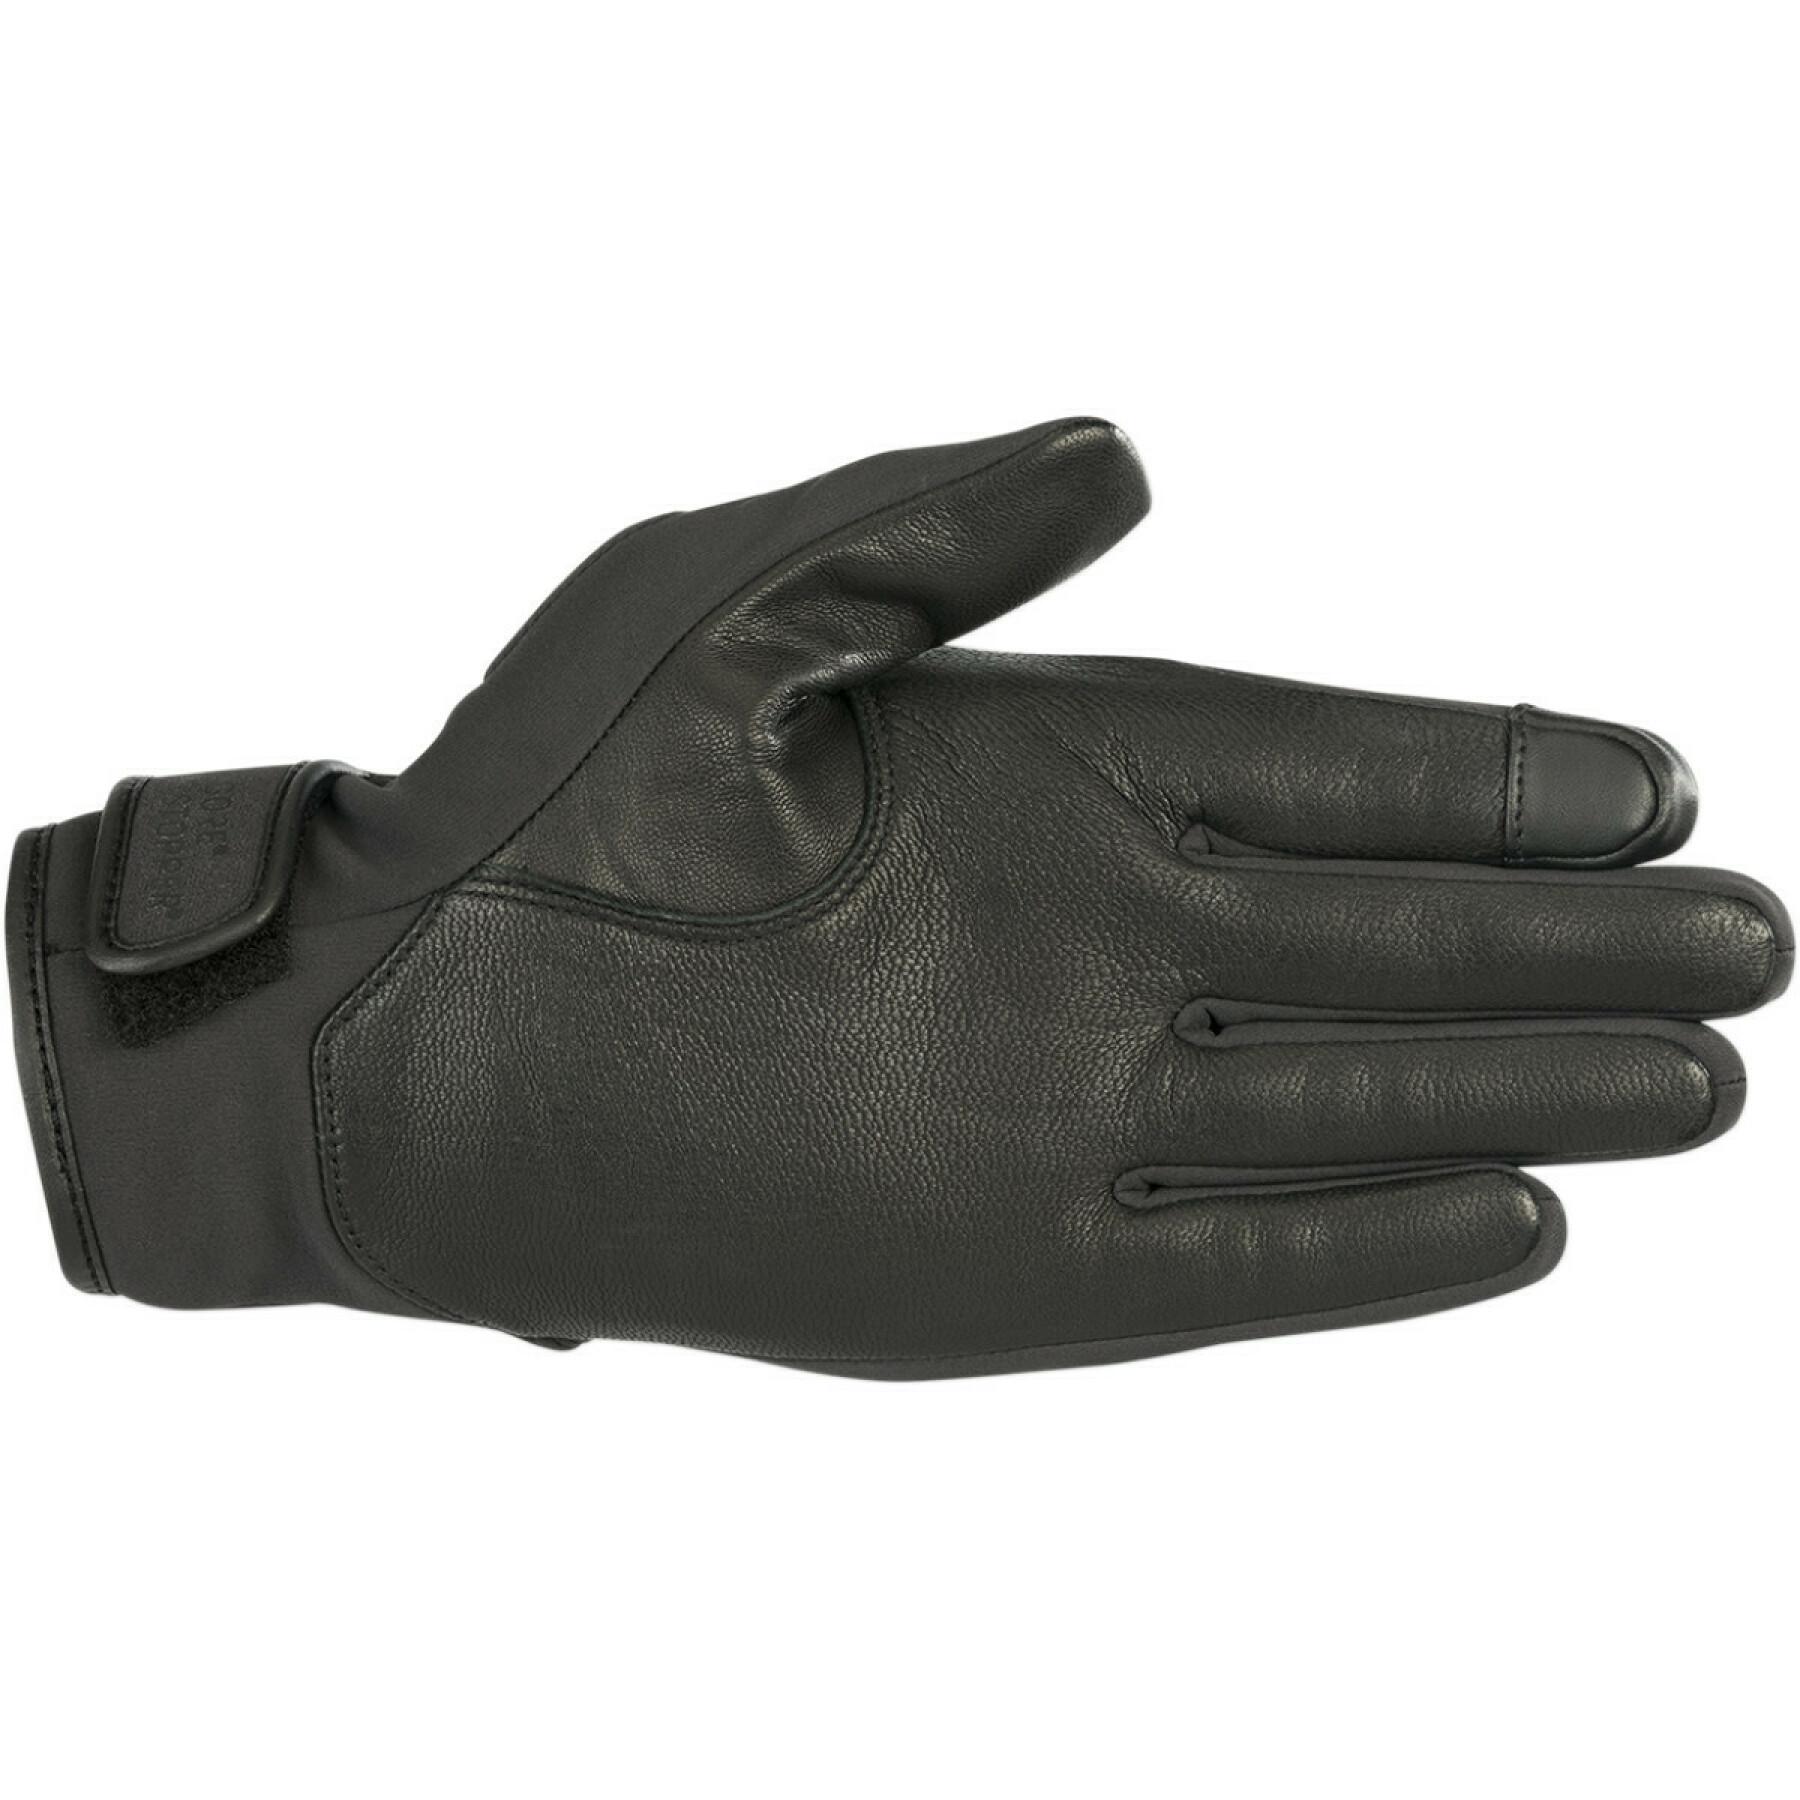 Motorcycle gloves Alpinestars C-1 V2 gore winDStopper®